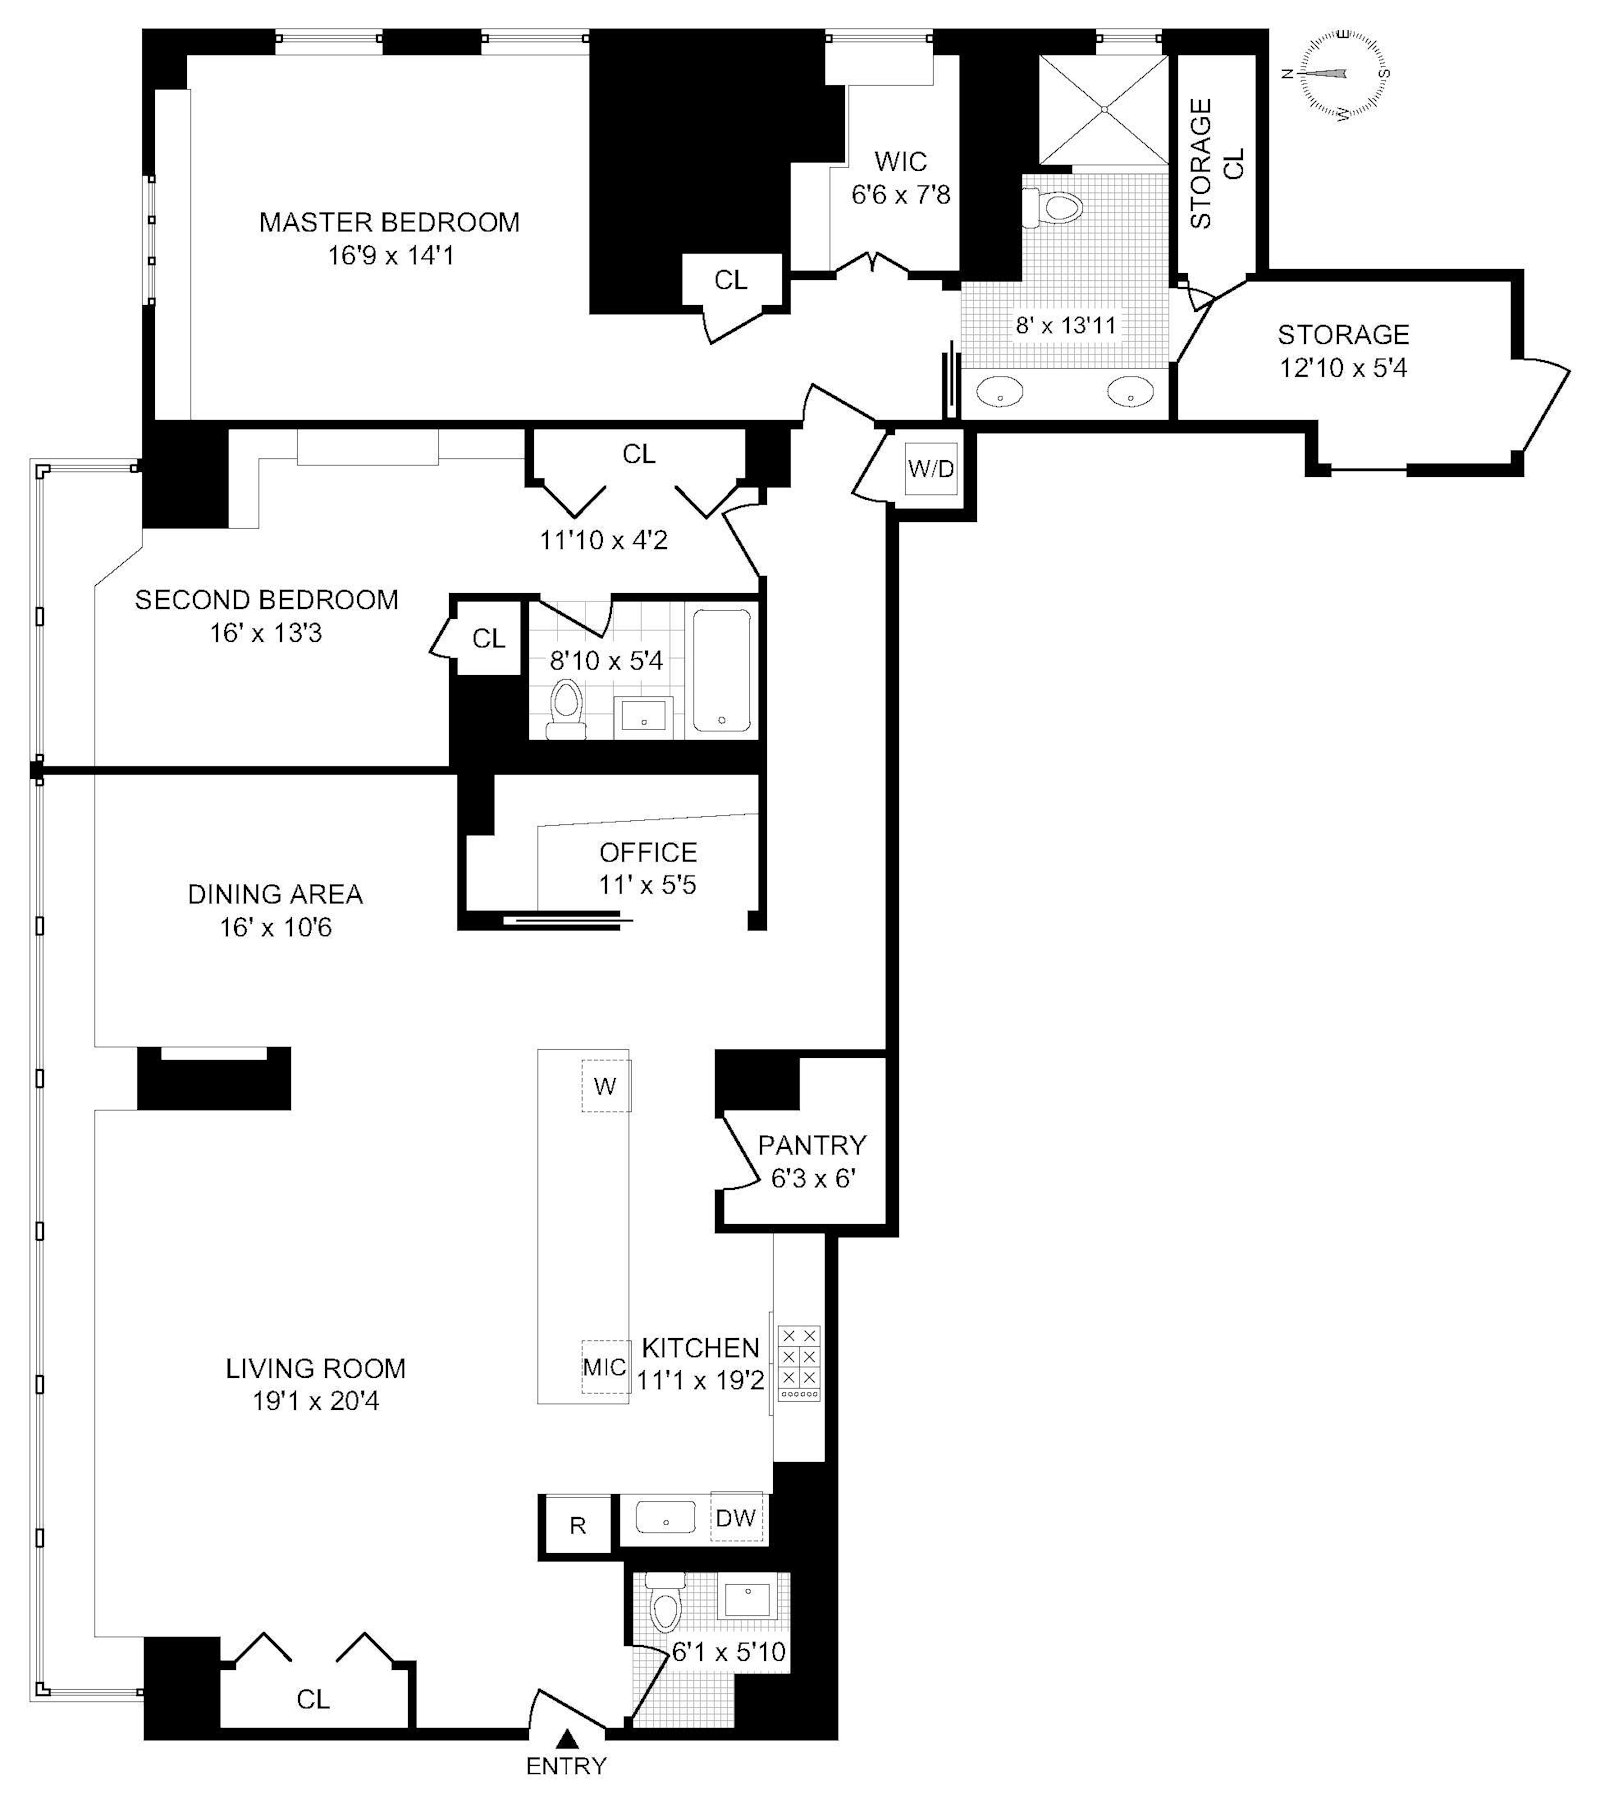 Floorplan for 130 West 30th Street